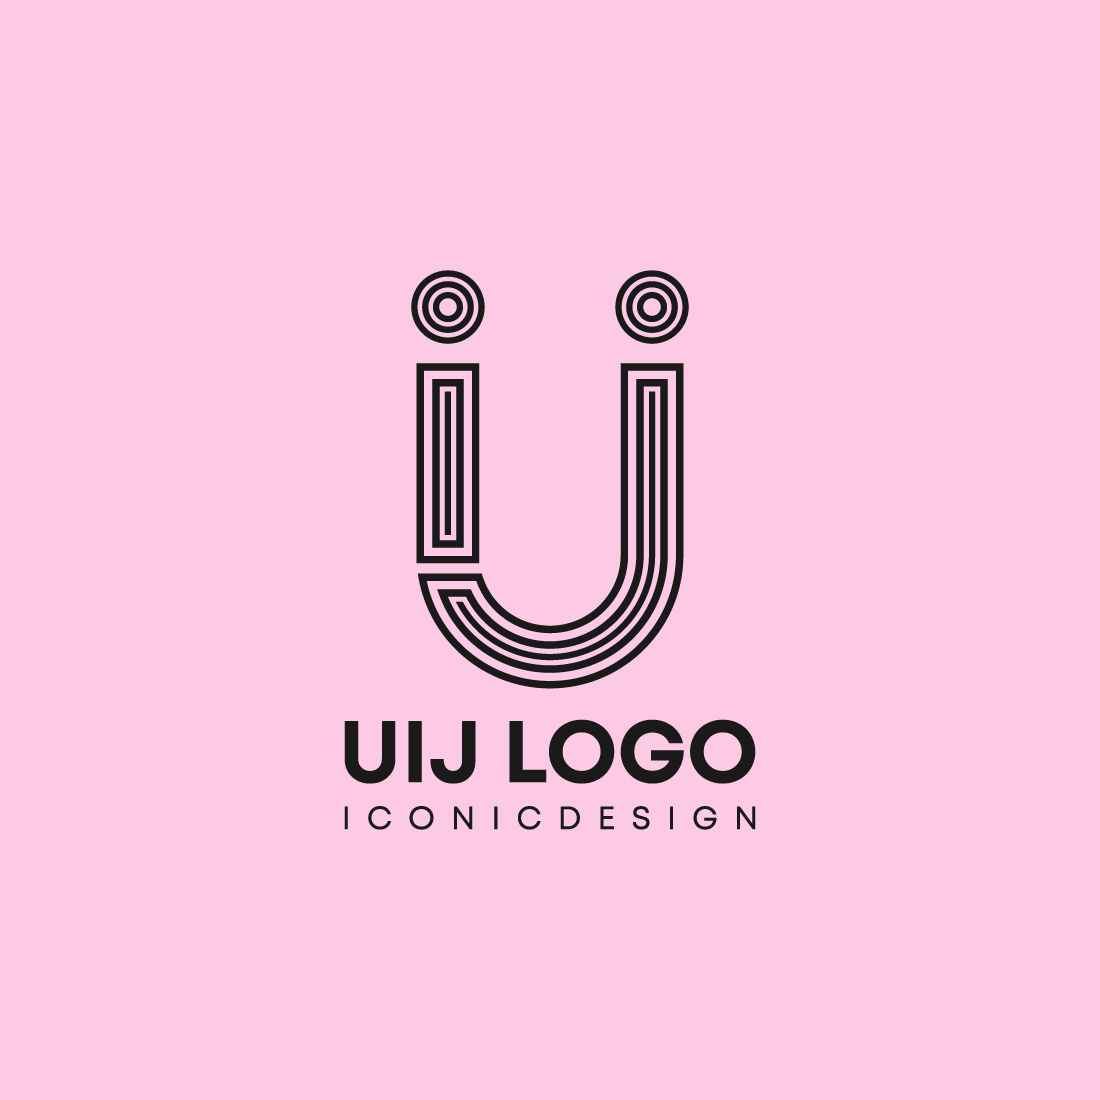 UIJ logo preview image.